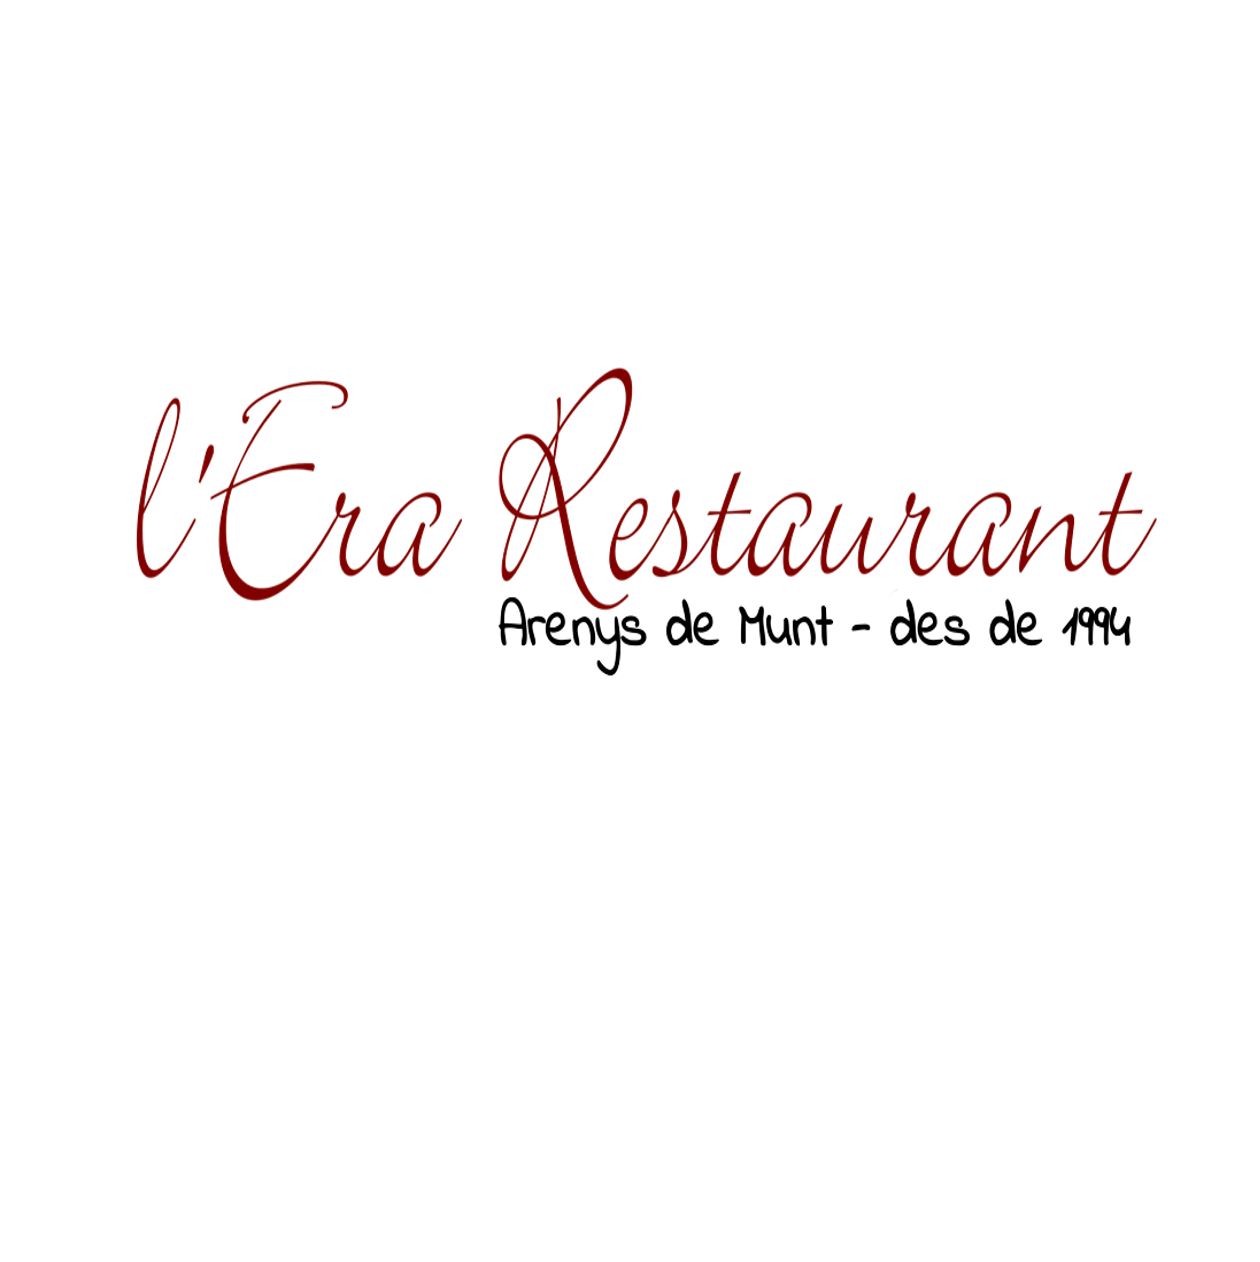 L'Era Restaurant